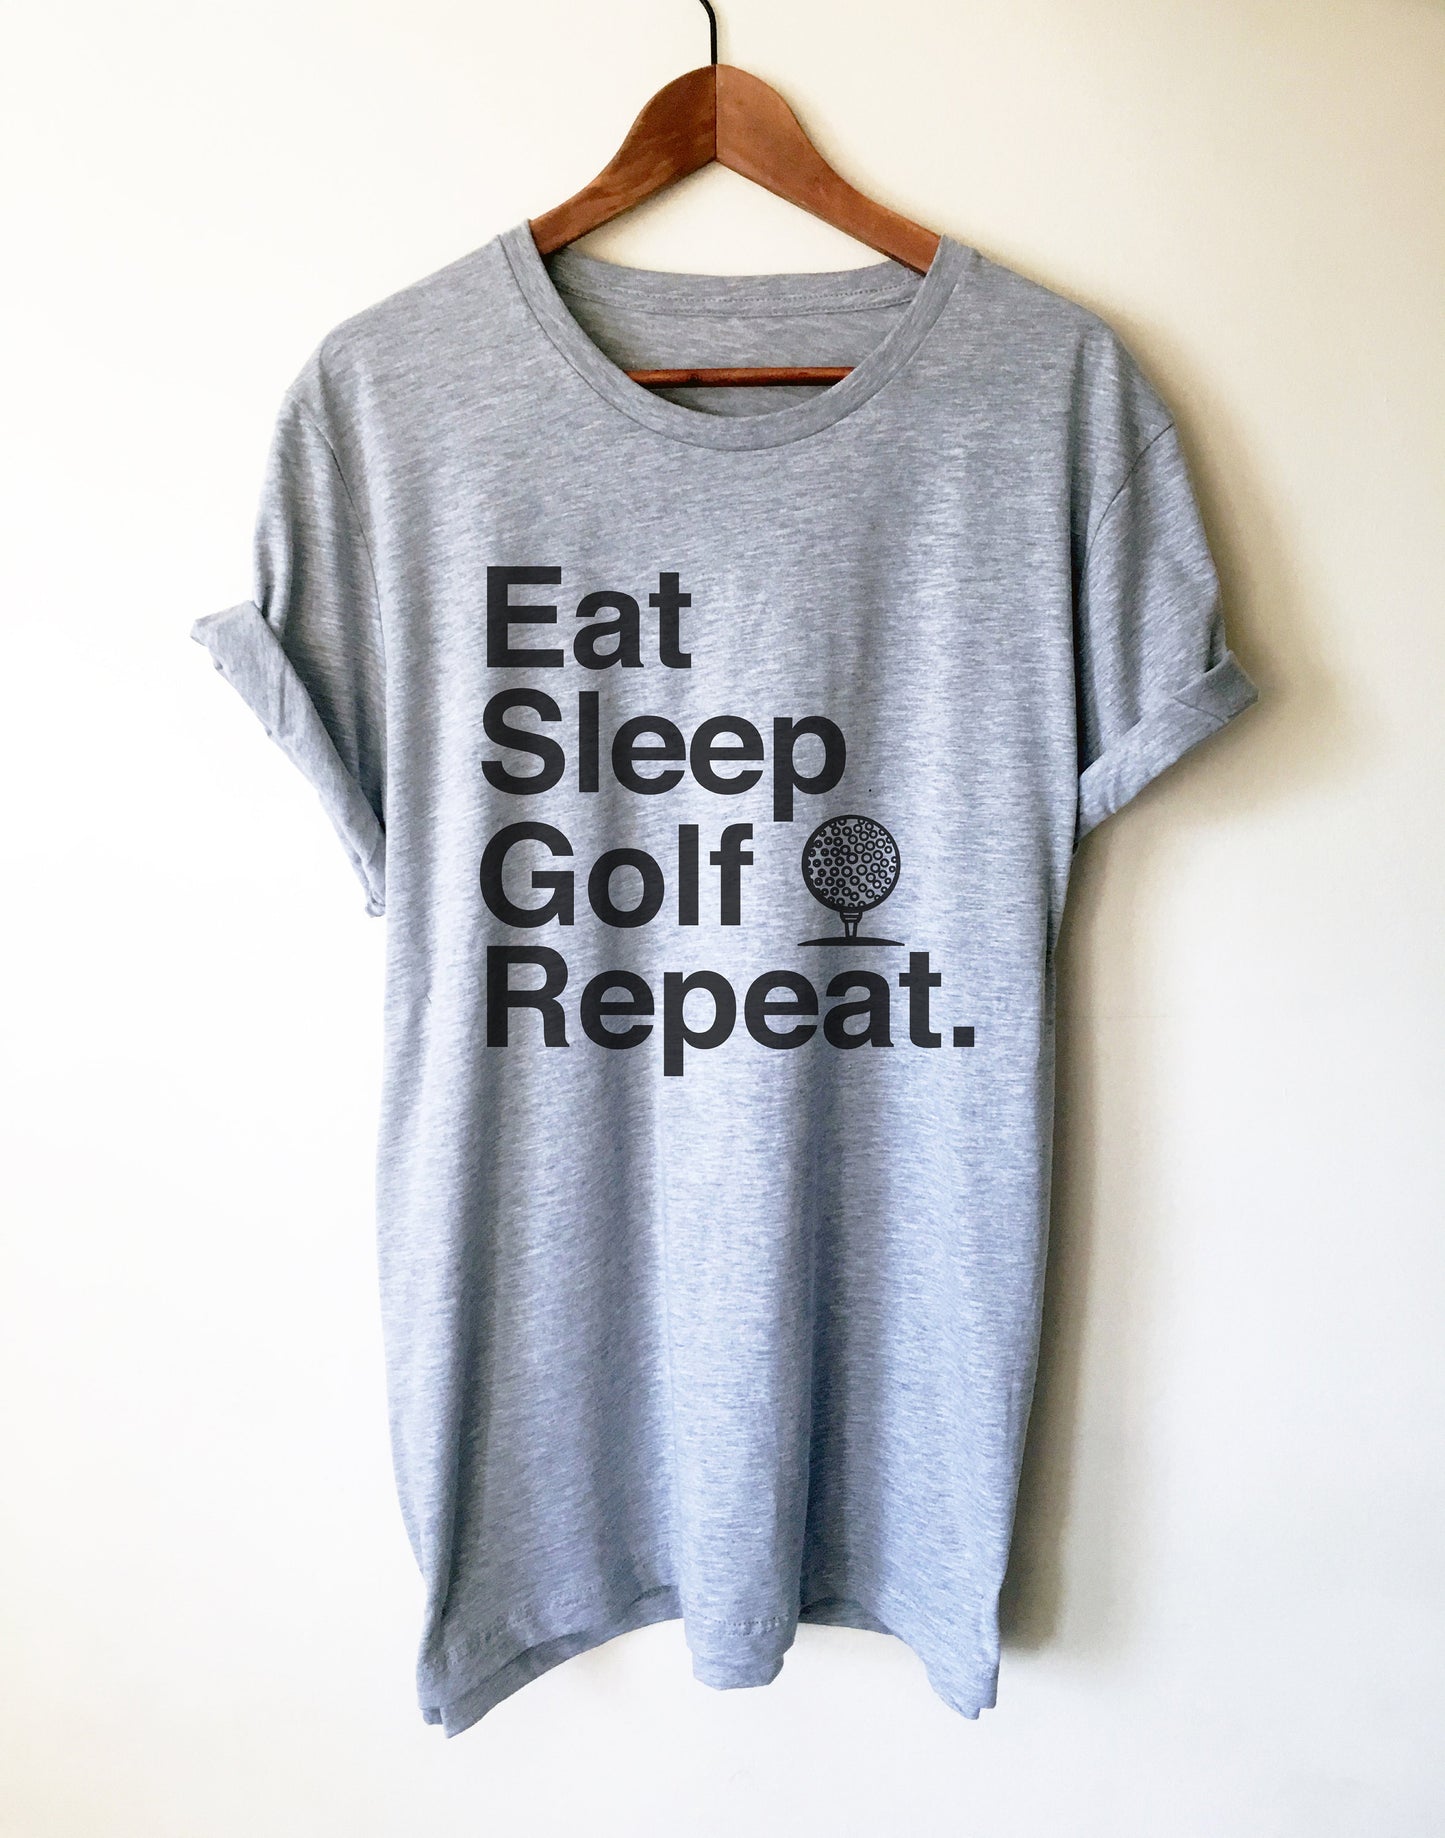 Eat Sleep Golf Repeat Unisex Shirt - Golf Shirt, Golf Gift, Golf Birthday Party, Grandpa Golf Gift, Golf Gift For Women, Golfing Shirt